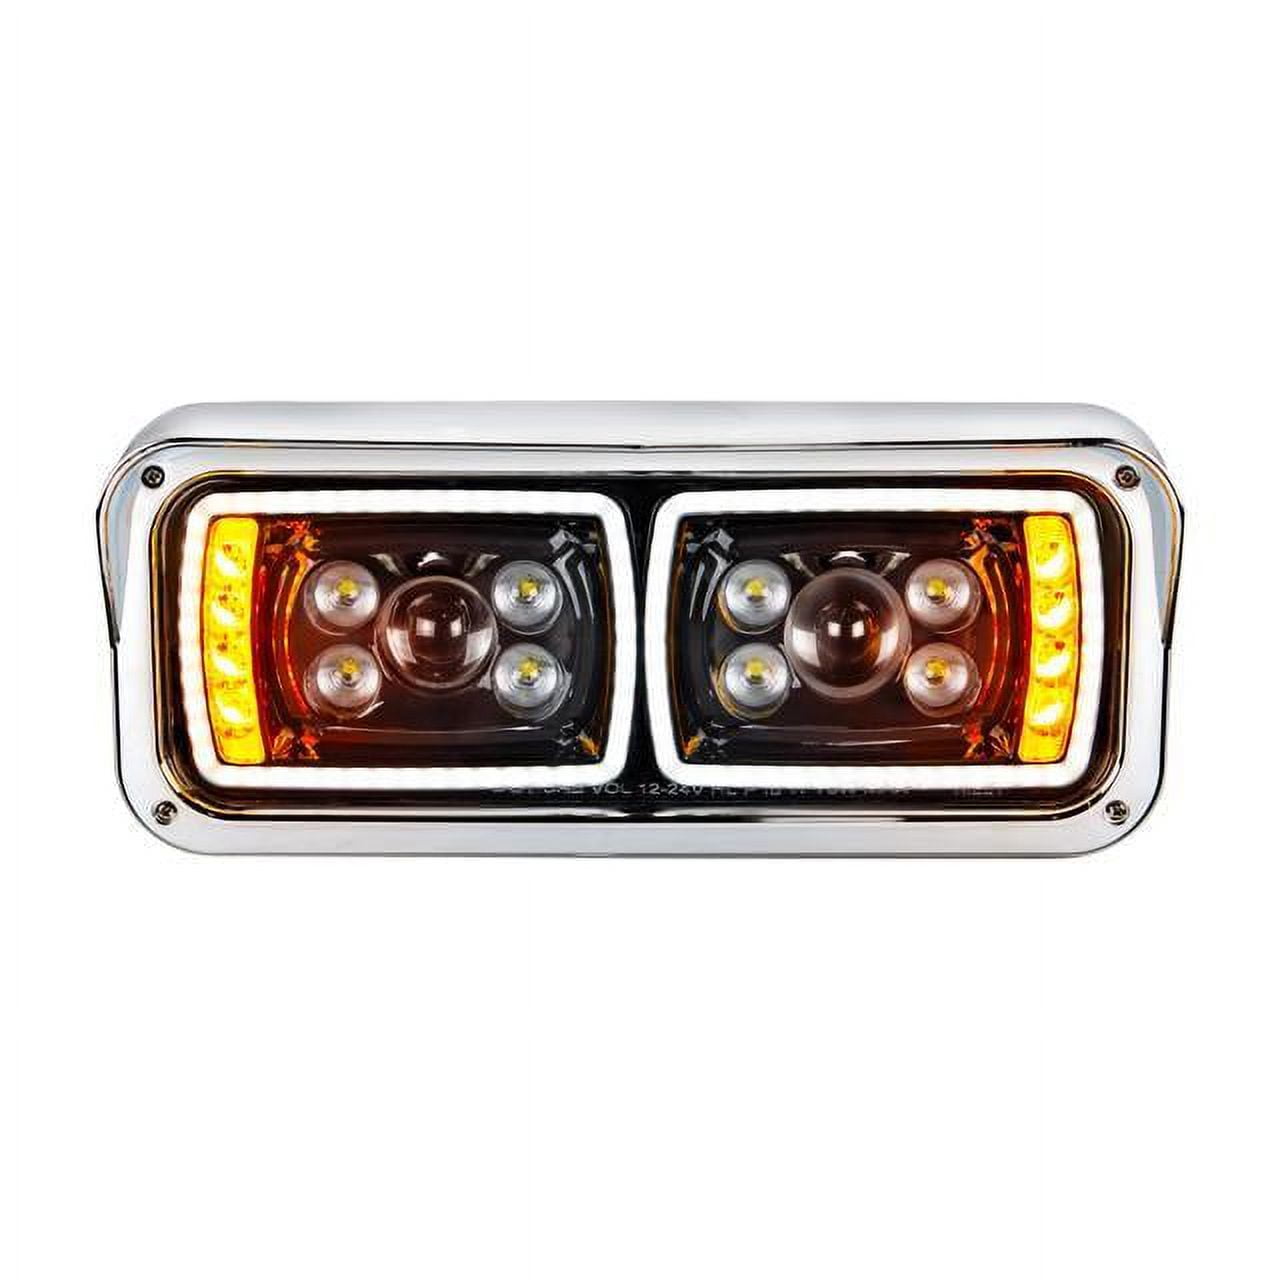 4x DRL white / orange + LED halogen headlights 12/24V grill / roll bar truck